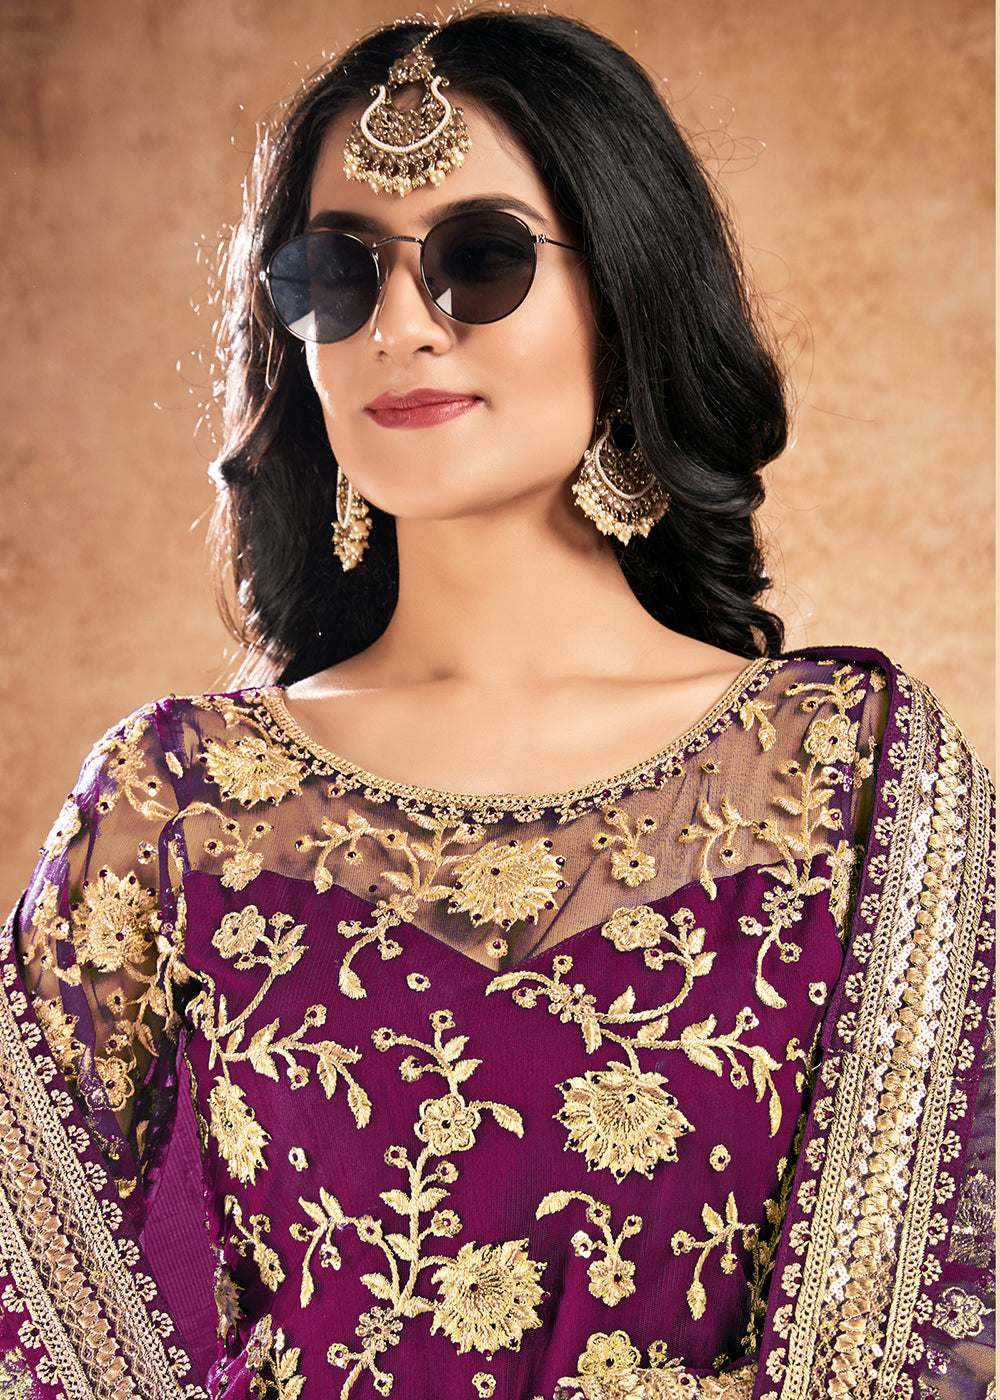 Buy Sober Purple Net Sequins Gharara Suit - Pakistani Gharara Suit